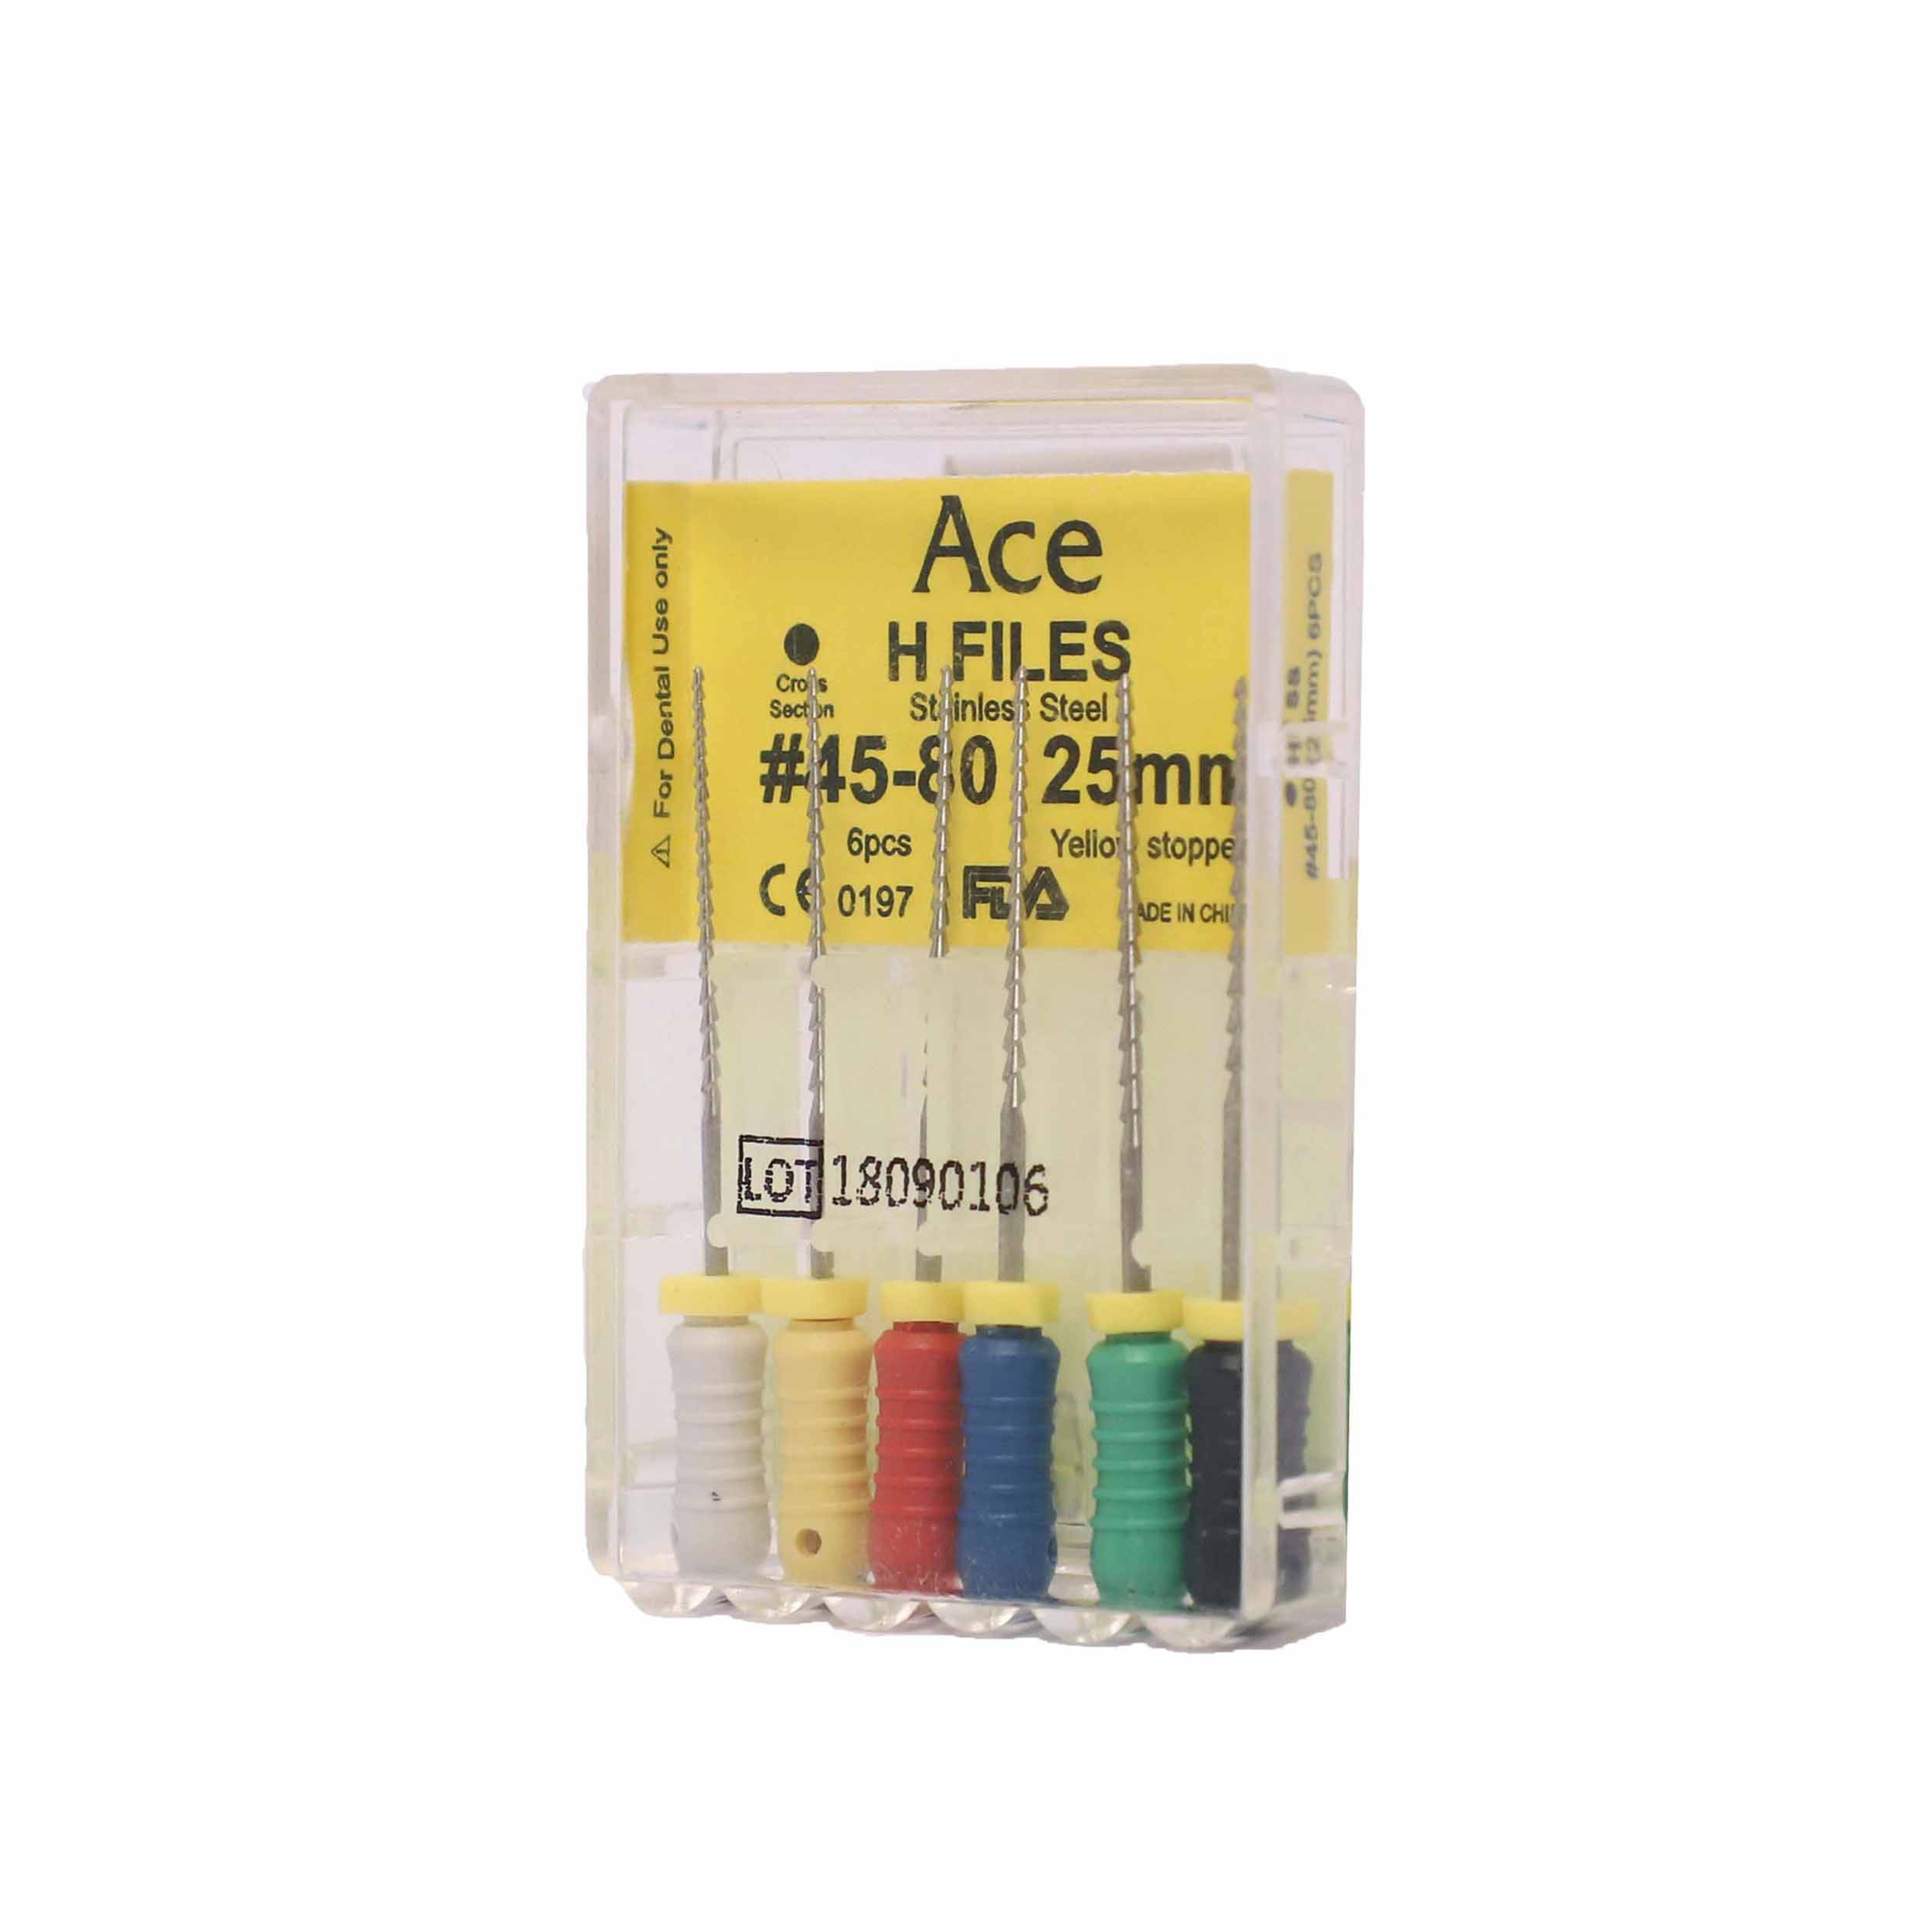 Prime Dental Ace H Files #45-80, 25mm(Pack Of 5)